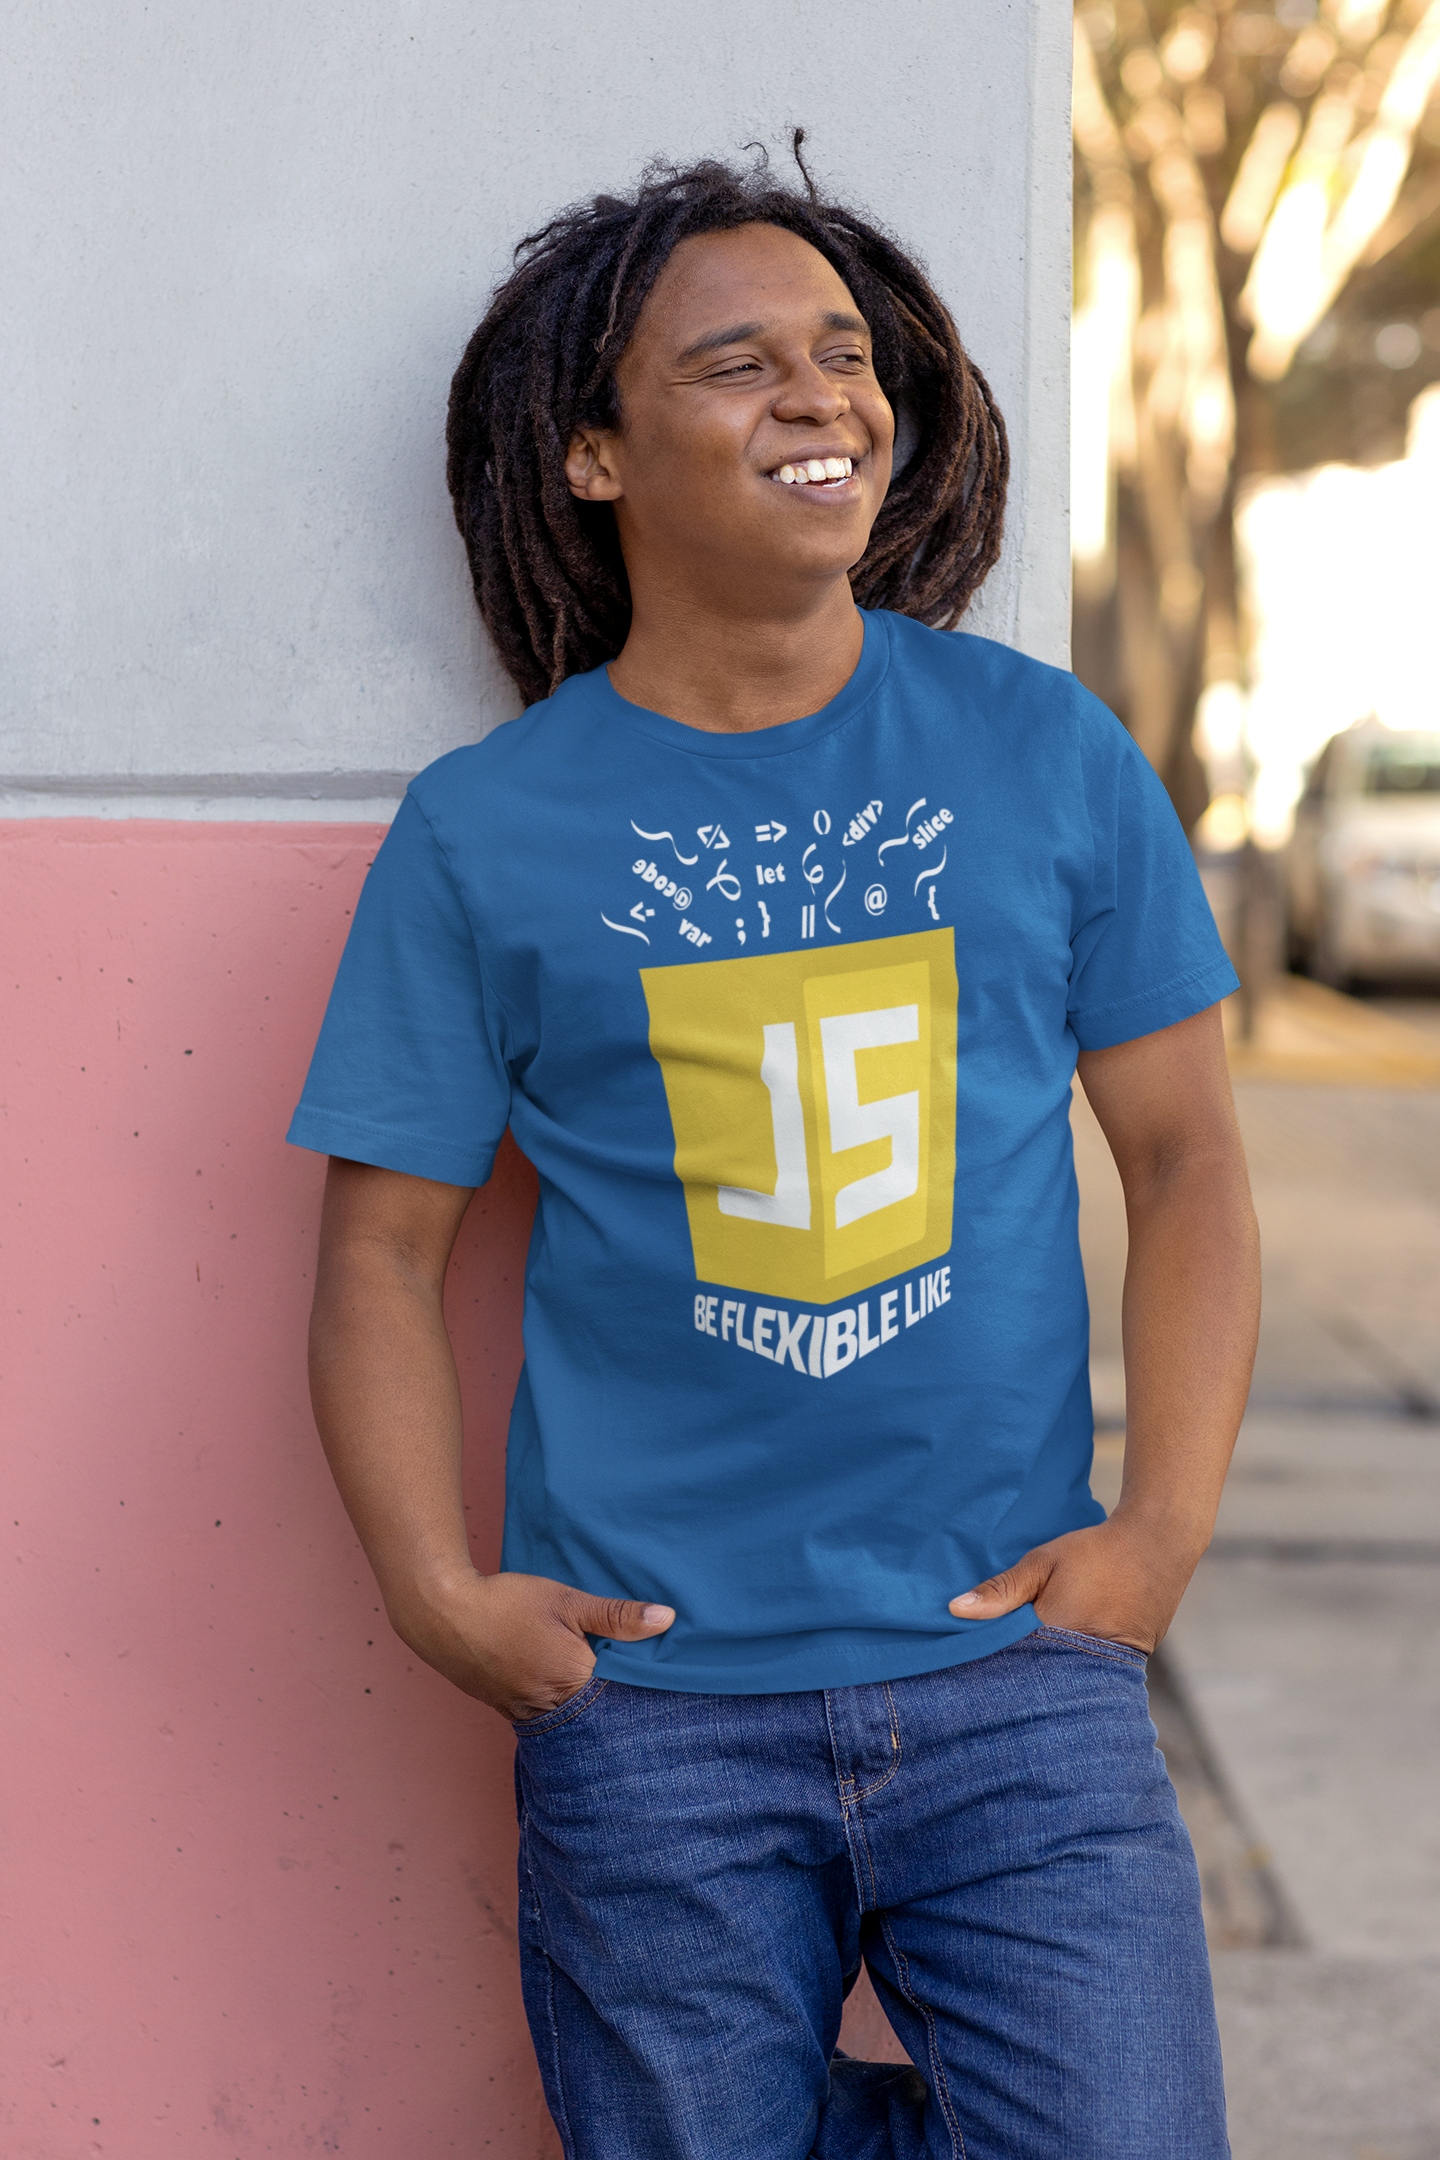 Be Flexible Like JavaScript - Coding T Shirt